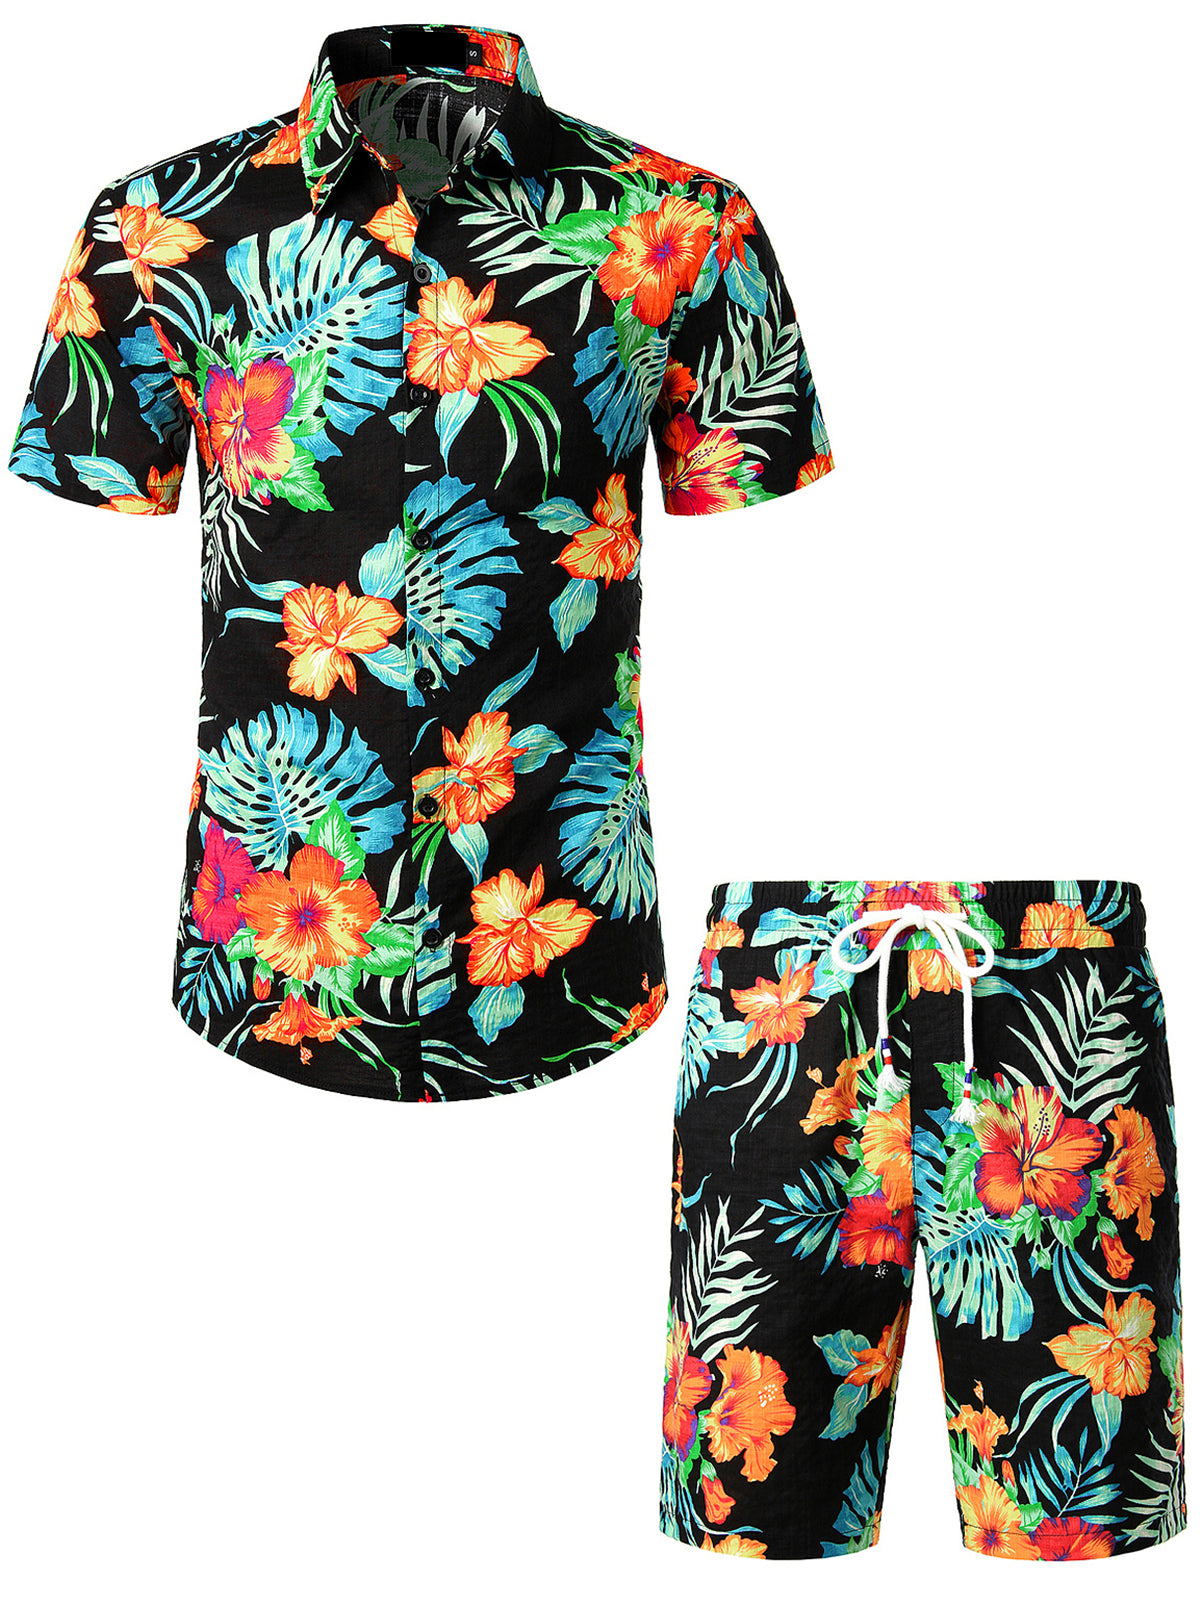 Men's Flower Tropical Floral Hawaiian Black Matching Shirt and Shorts Set